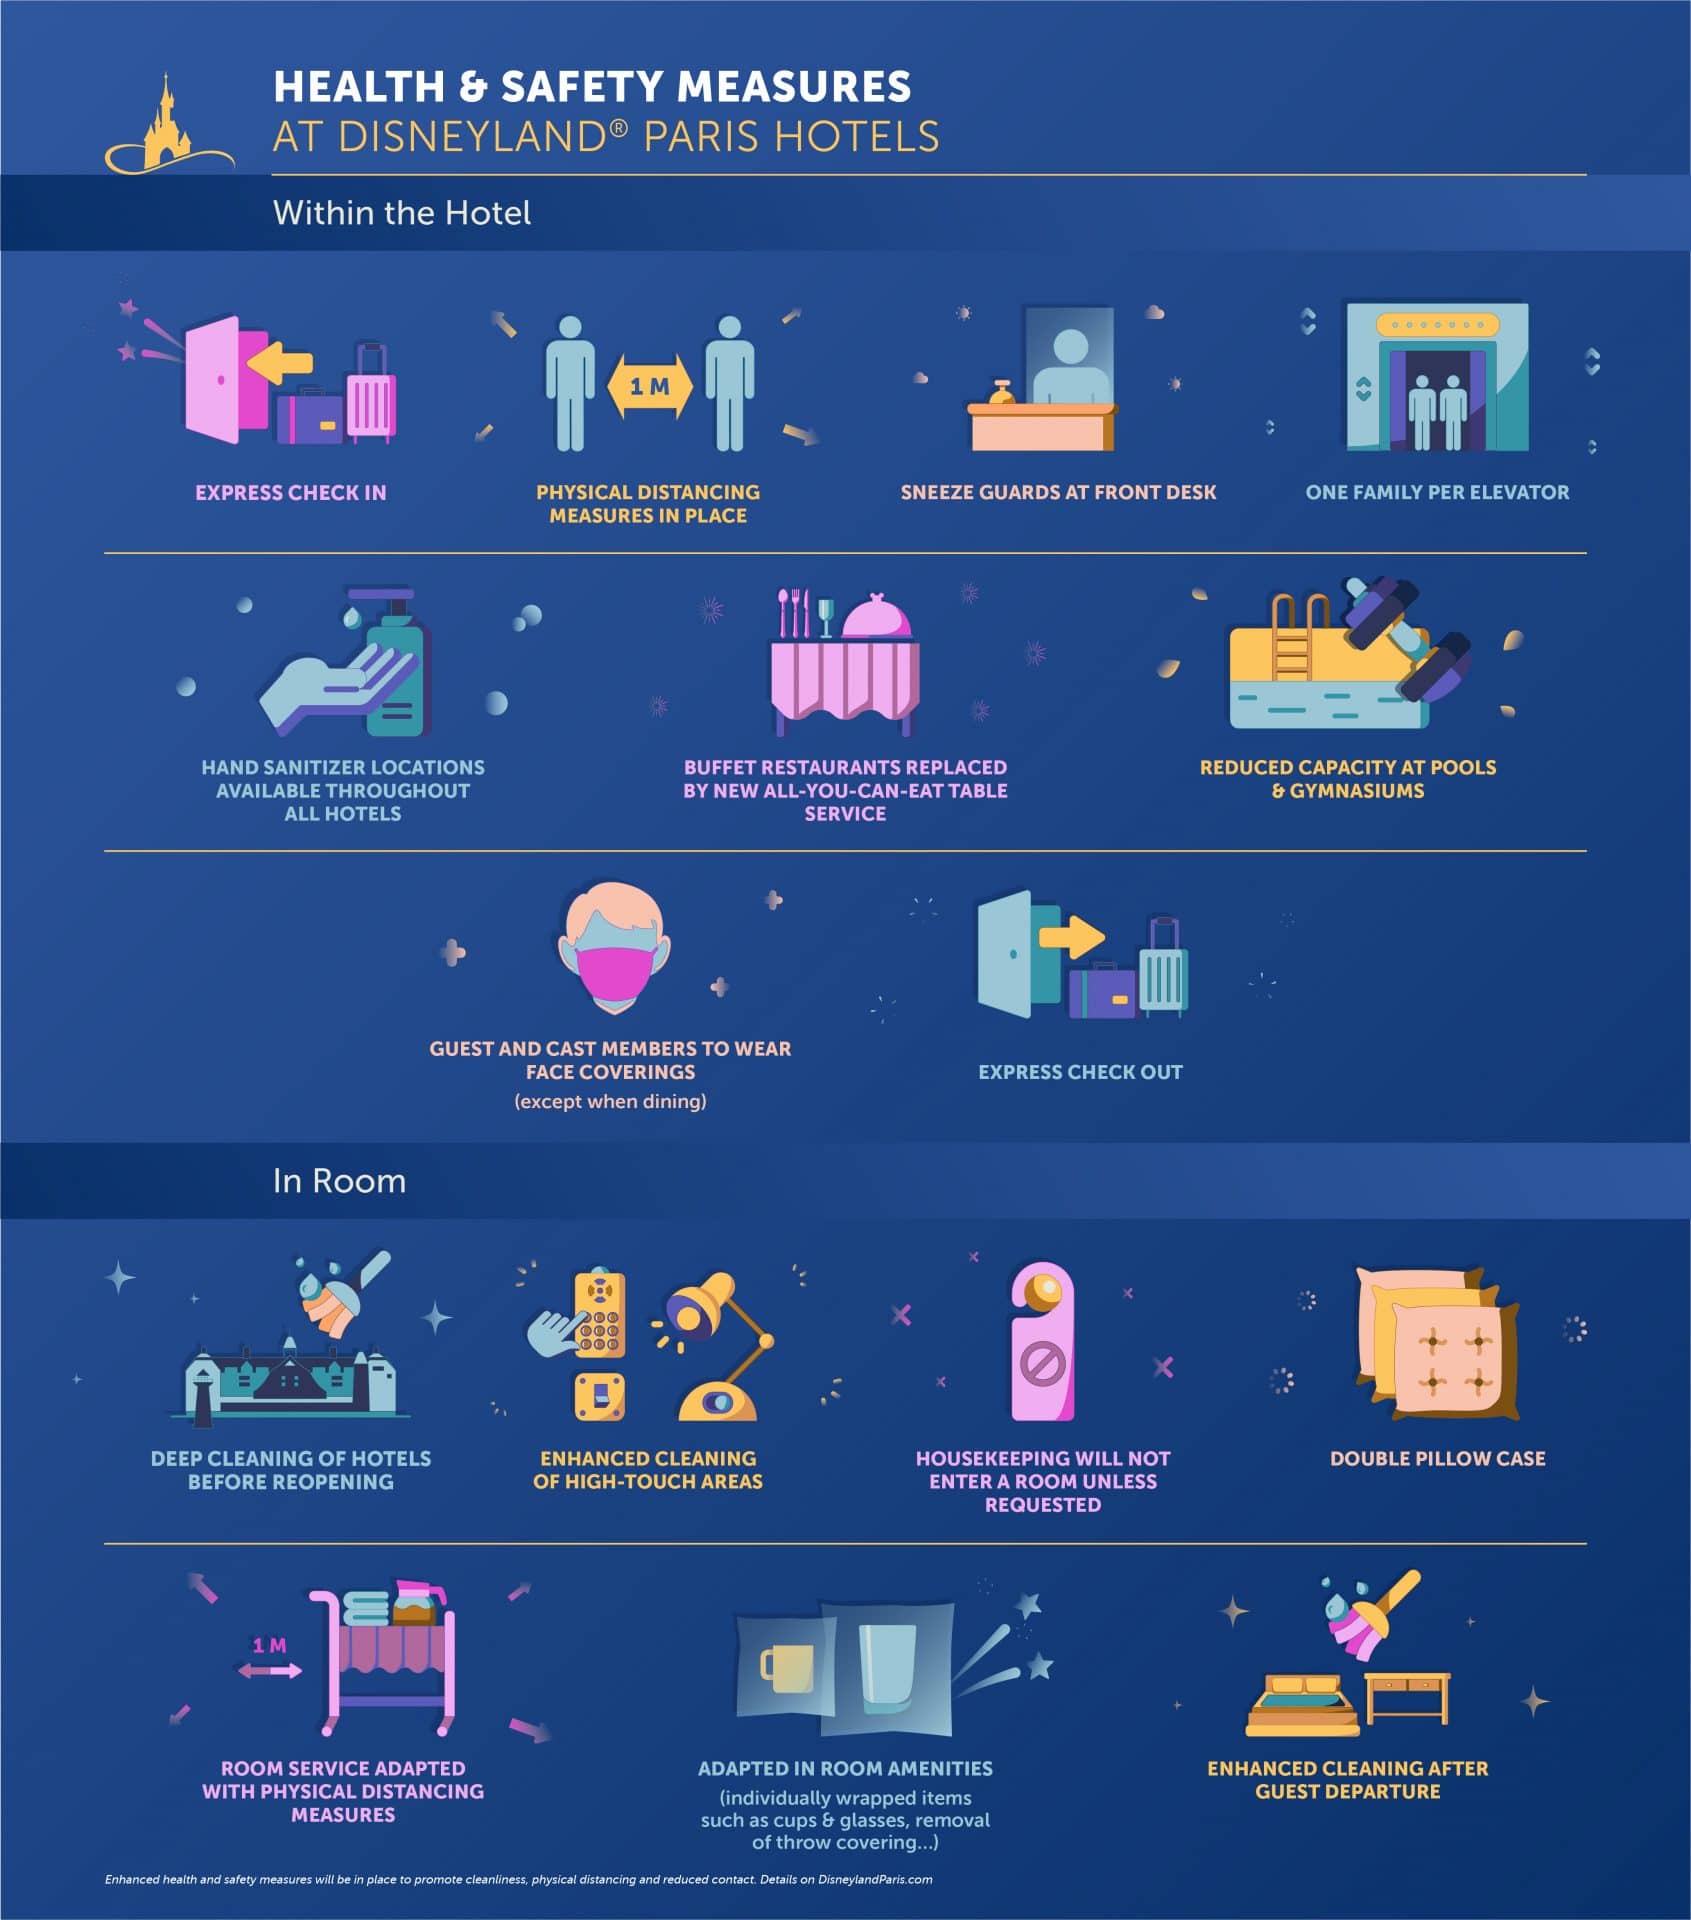 Disneyland Paris Infographic - Health & Safety Measures at Disneyland Paris Hotels